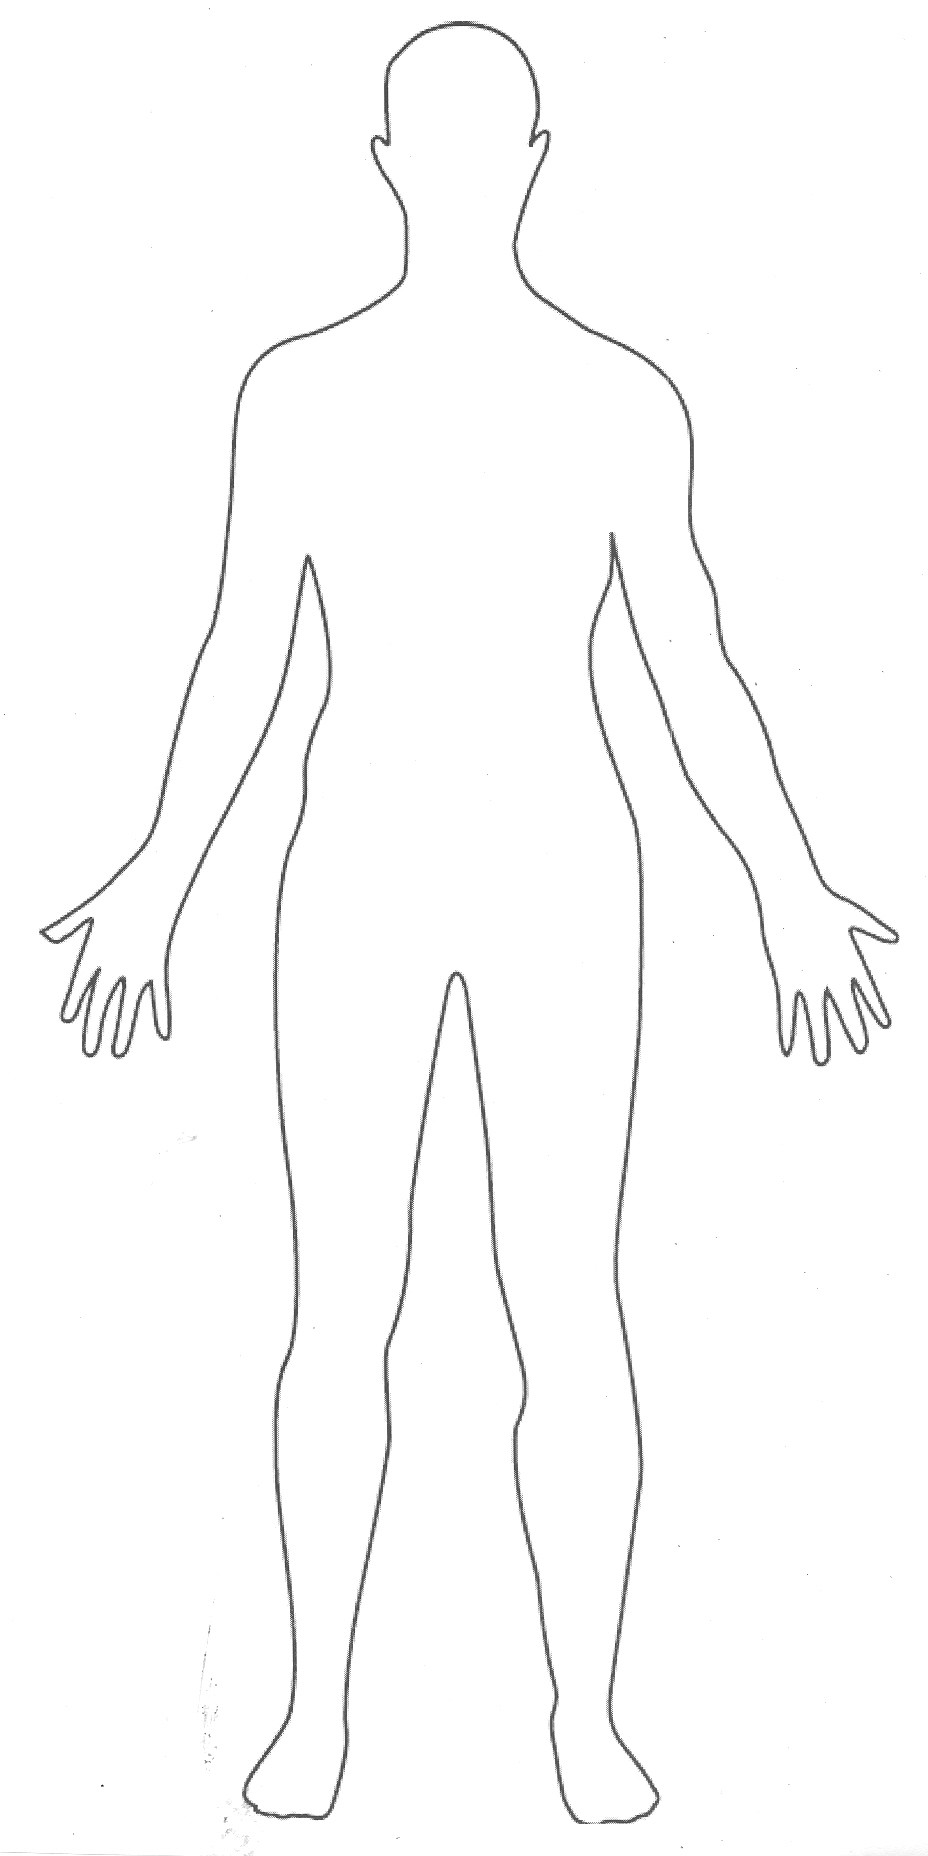 Picture of anatomy of body | www.okaidimalta.com